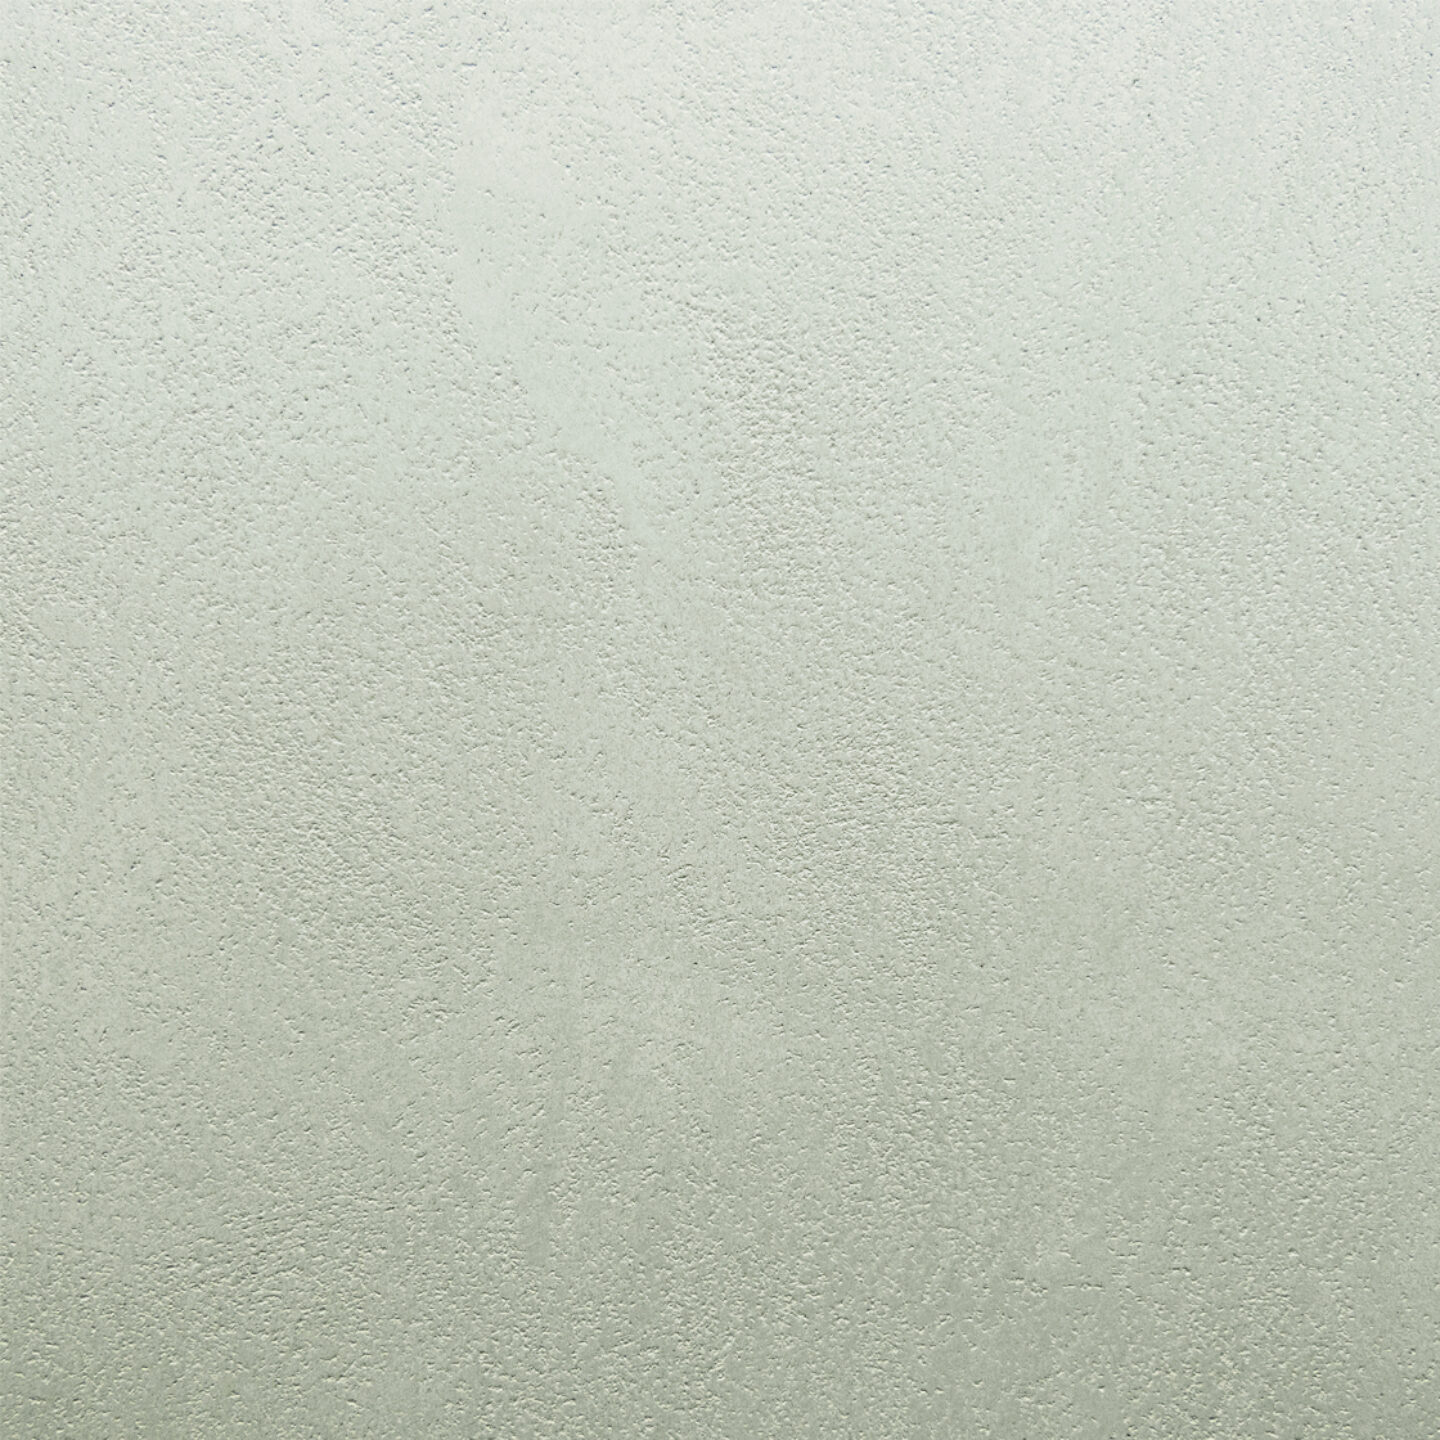 Close up of Armourcoat leatherstone exterior polished plaster finish - 73